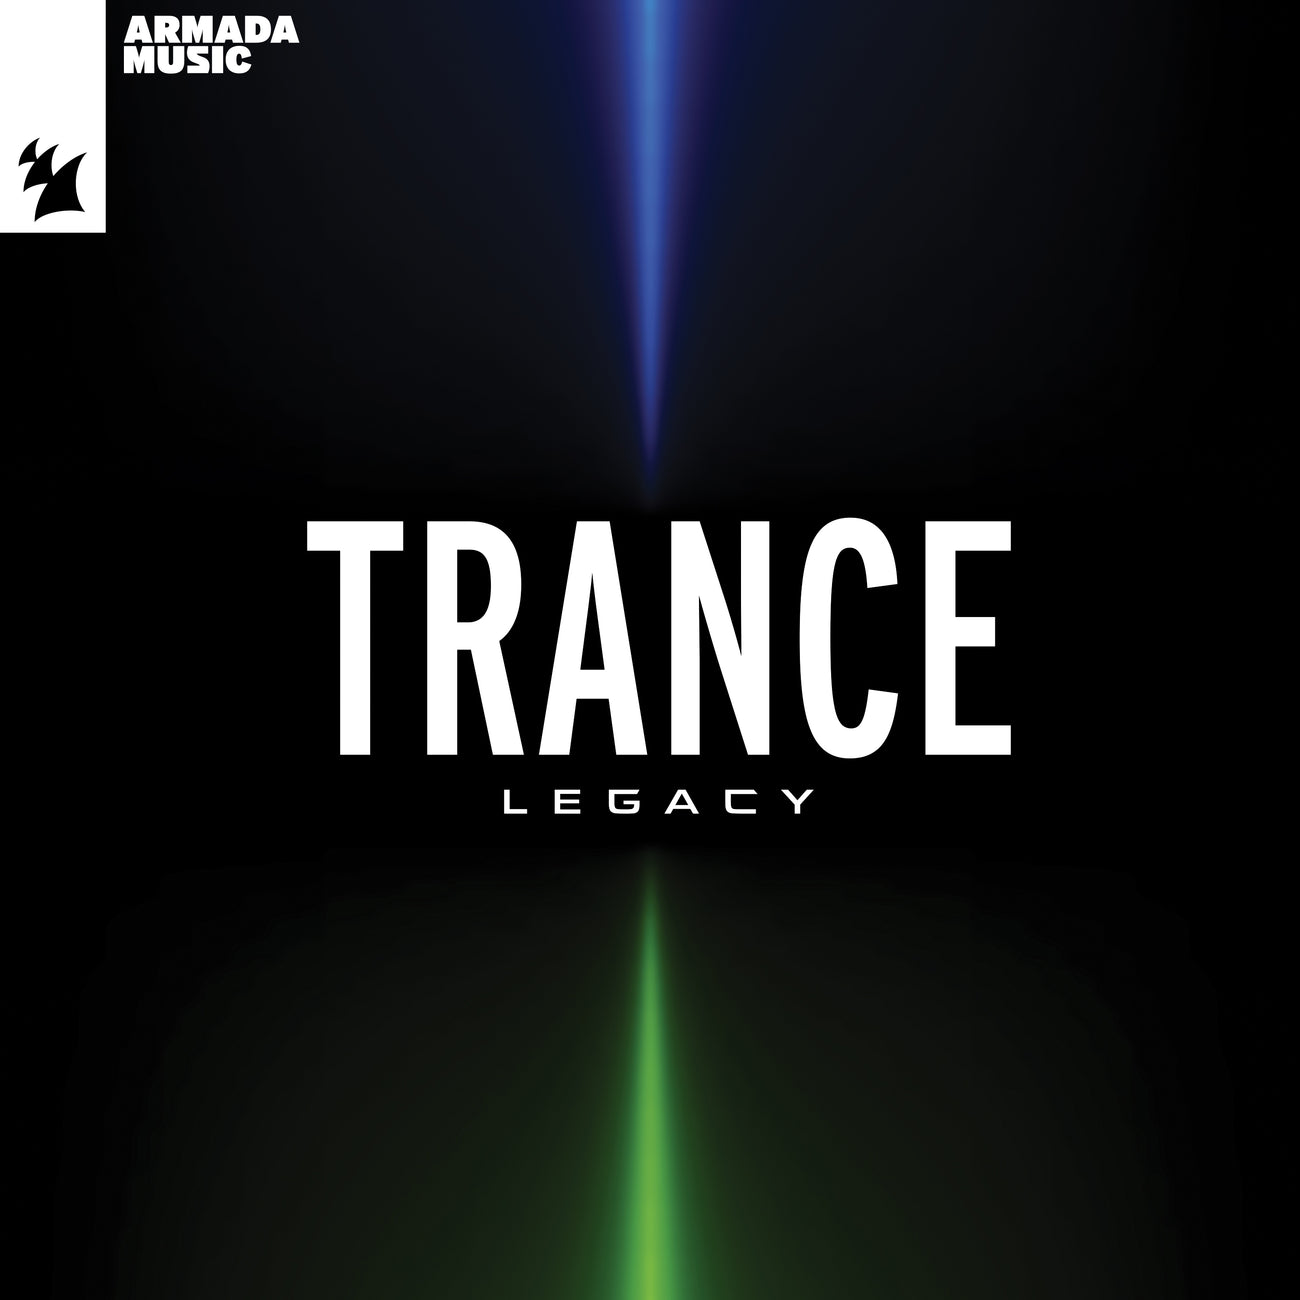 Armada Music - Trance Legacy (vinyl)